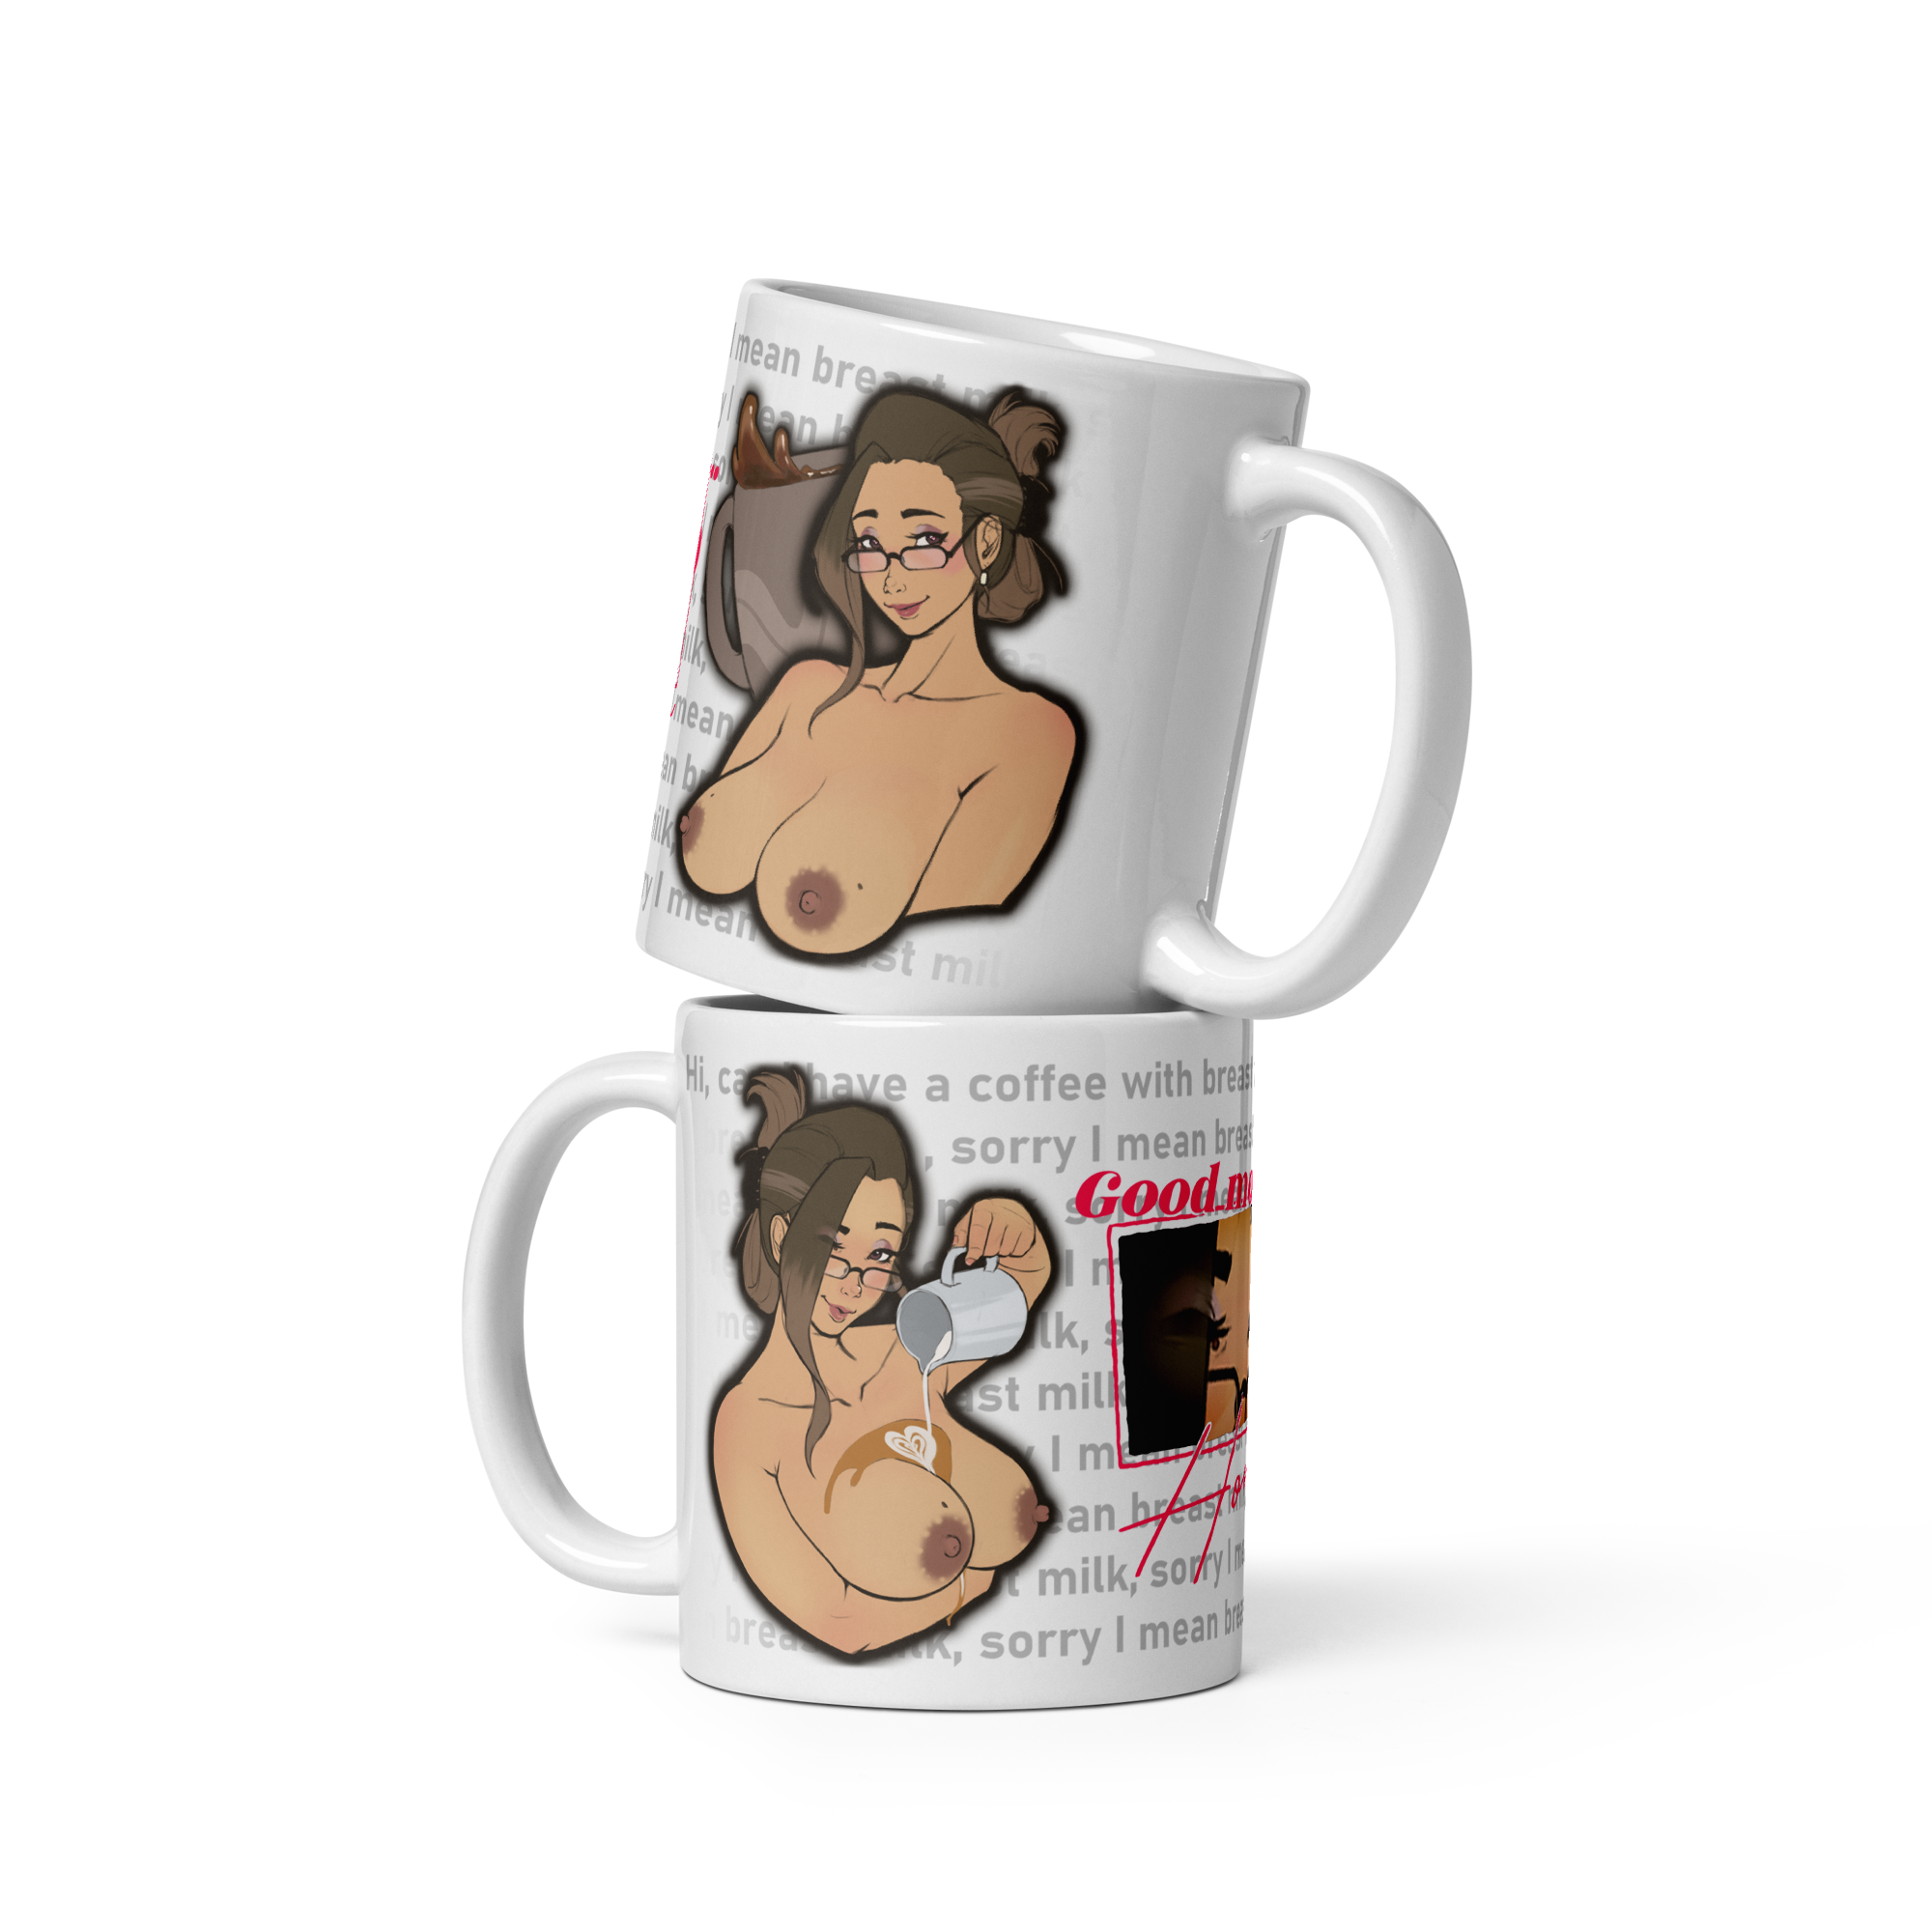 Hot Coffee mug